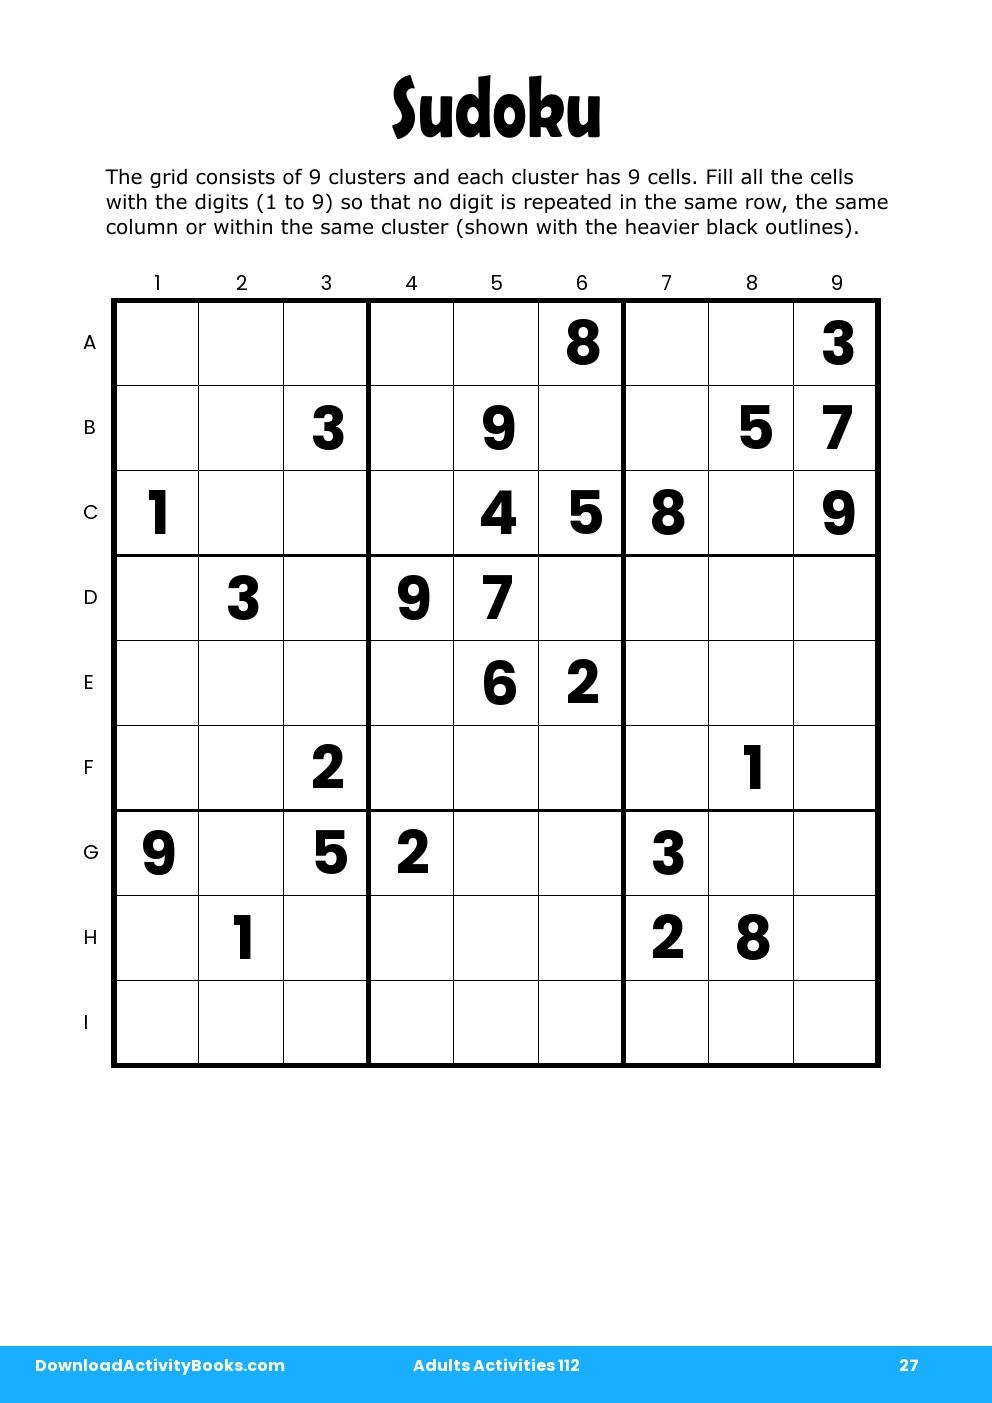 Sudoku in Adults Activities 112